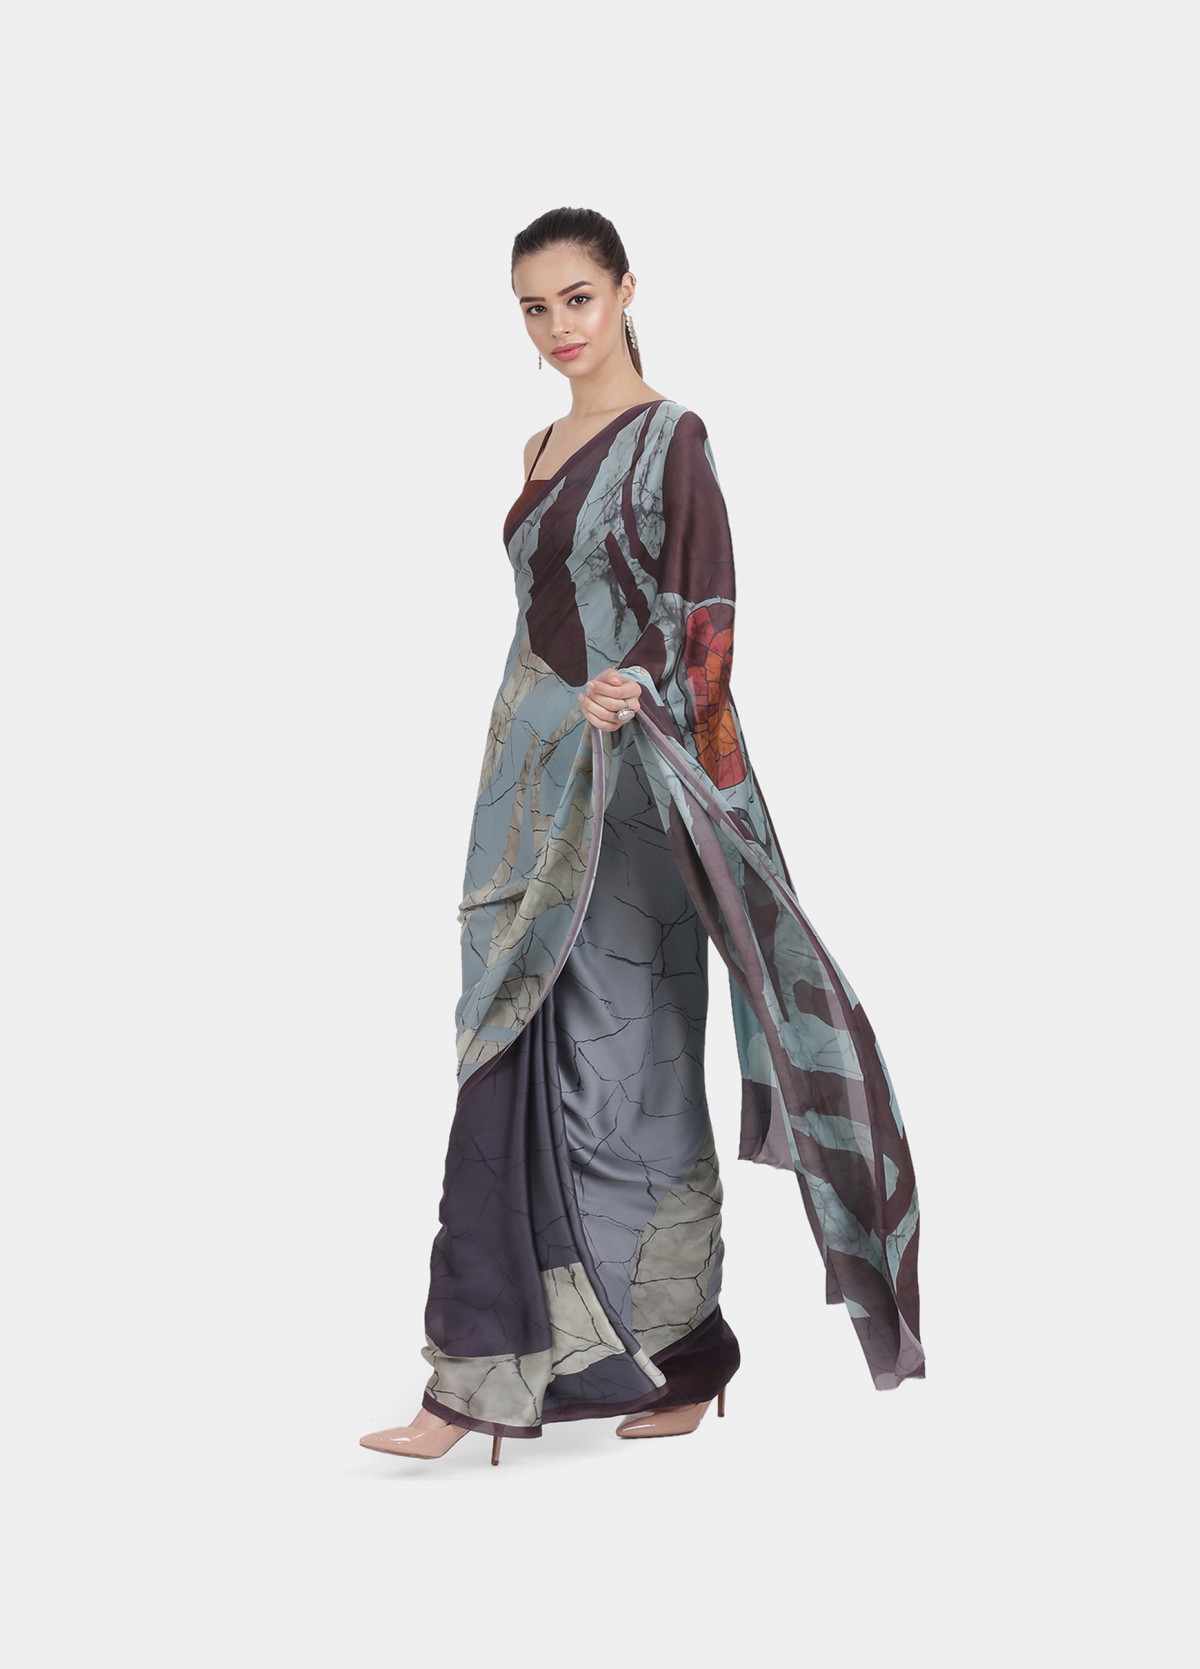 The Moody Marti Sari